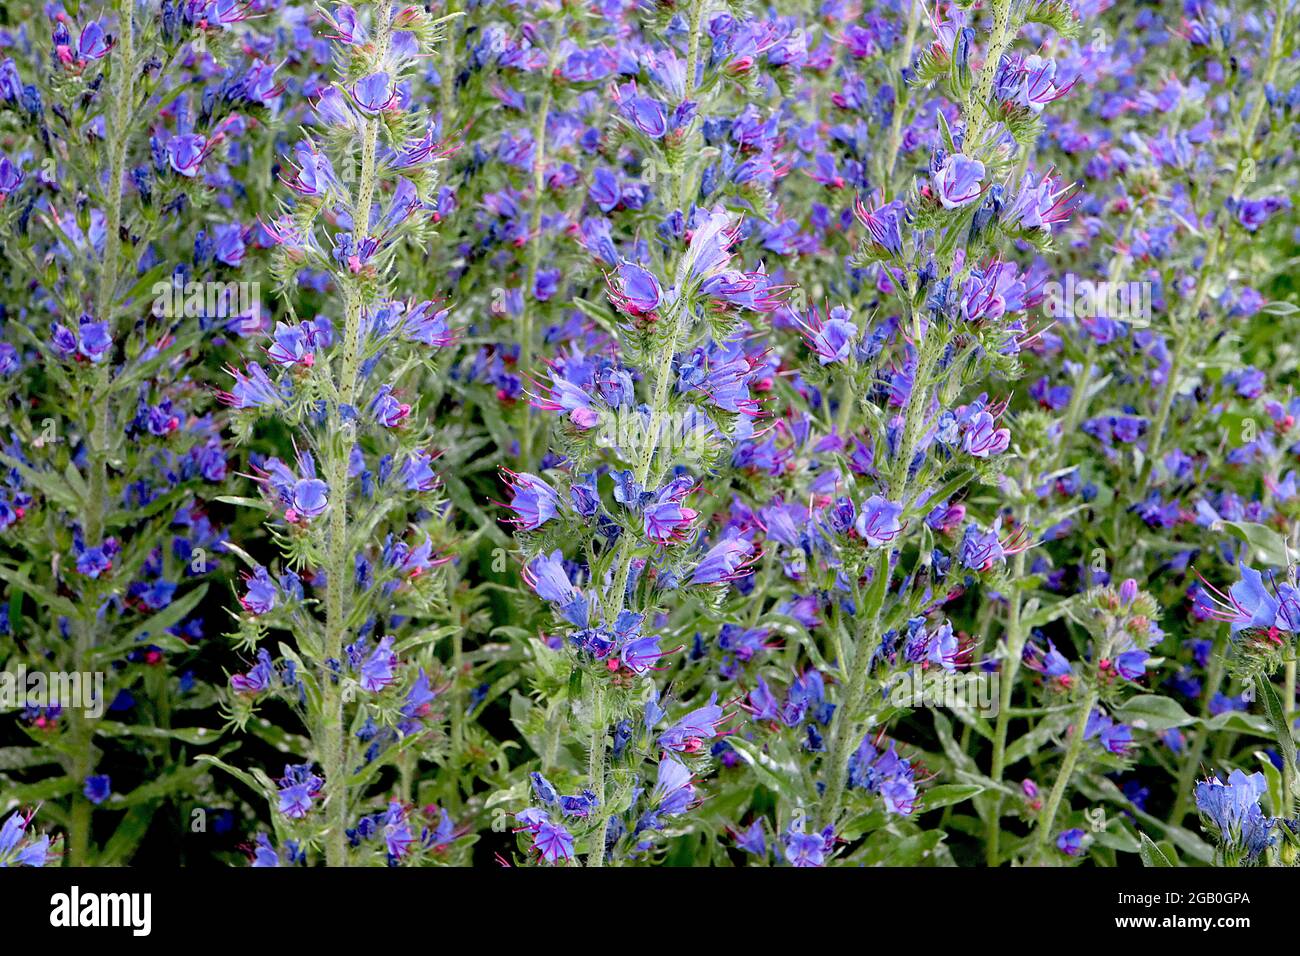 Echium vulgare viper’s bugloss – tall stems of violet blue flowers and elongated pink stamens,  June, England, UK Stock Photo